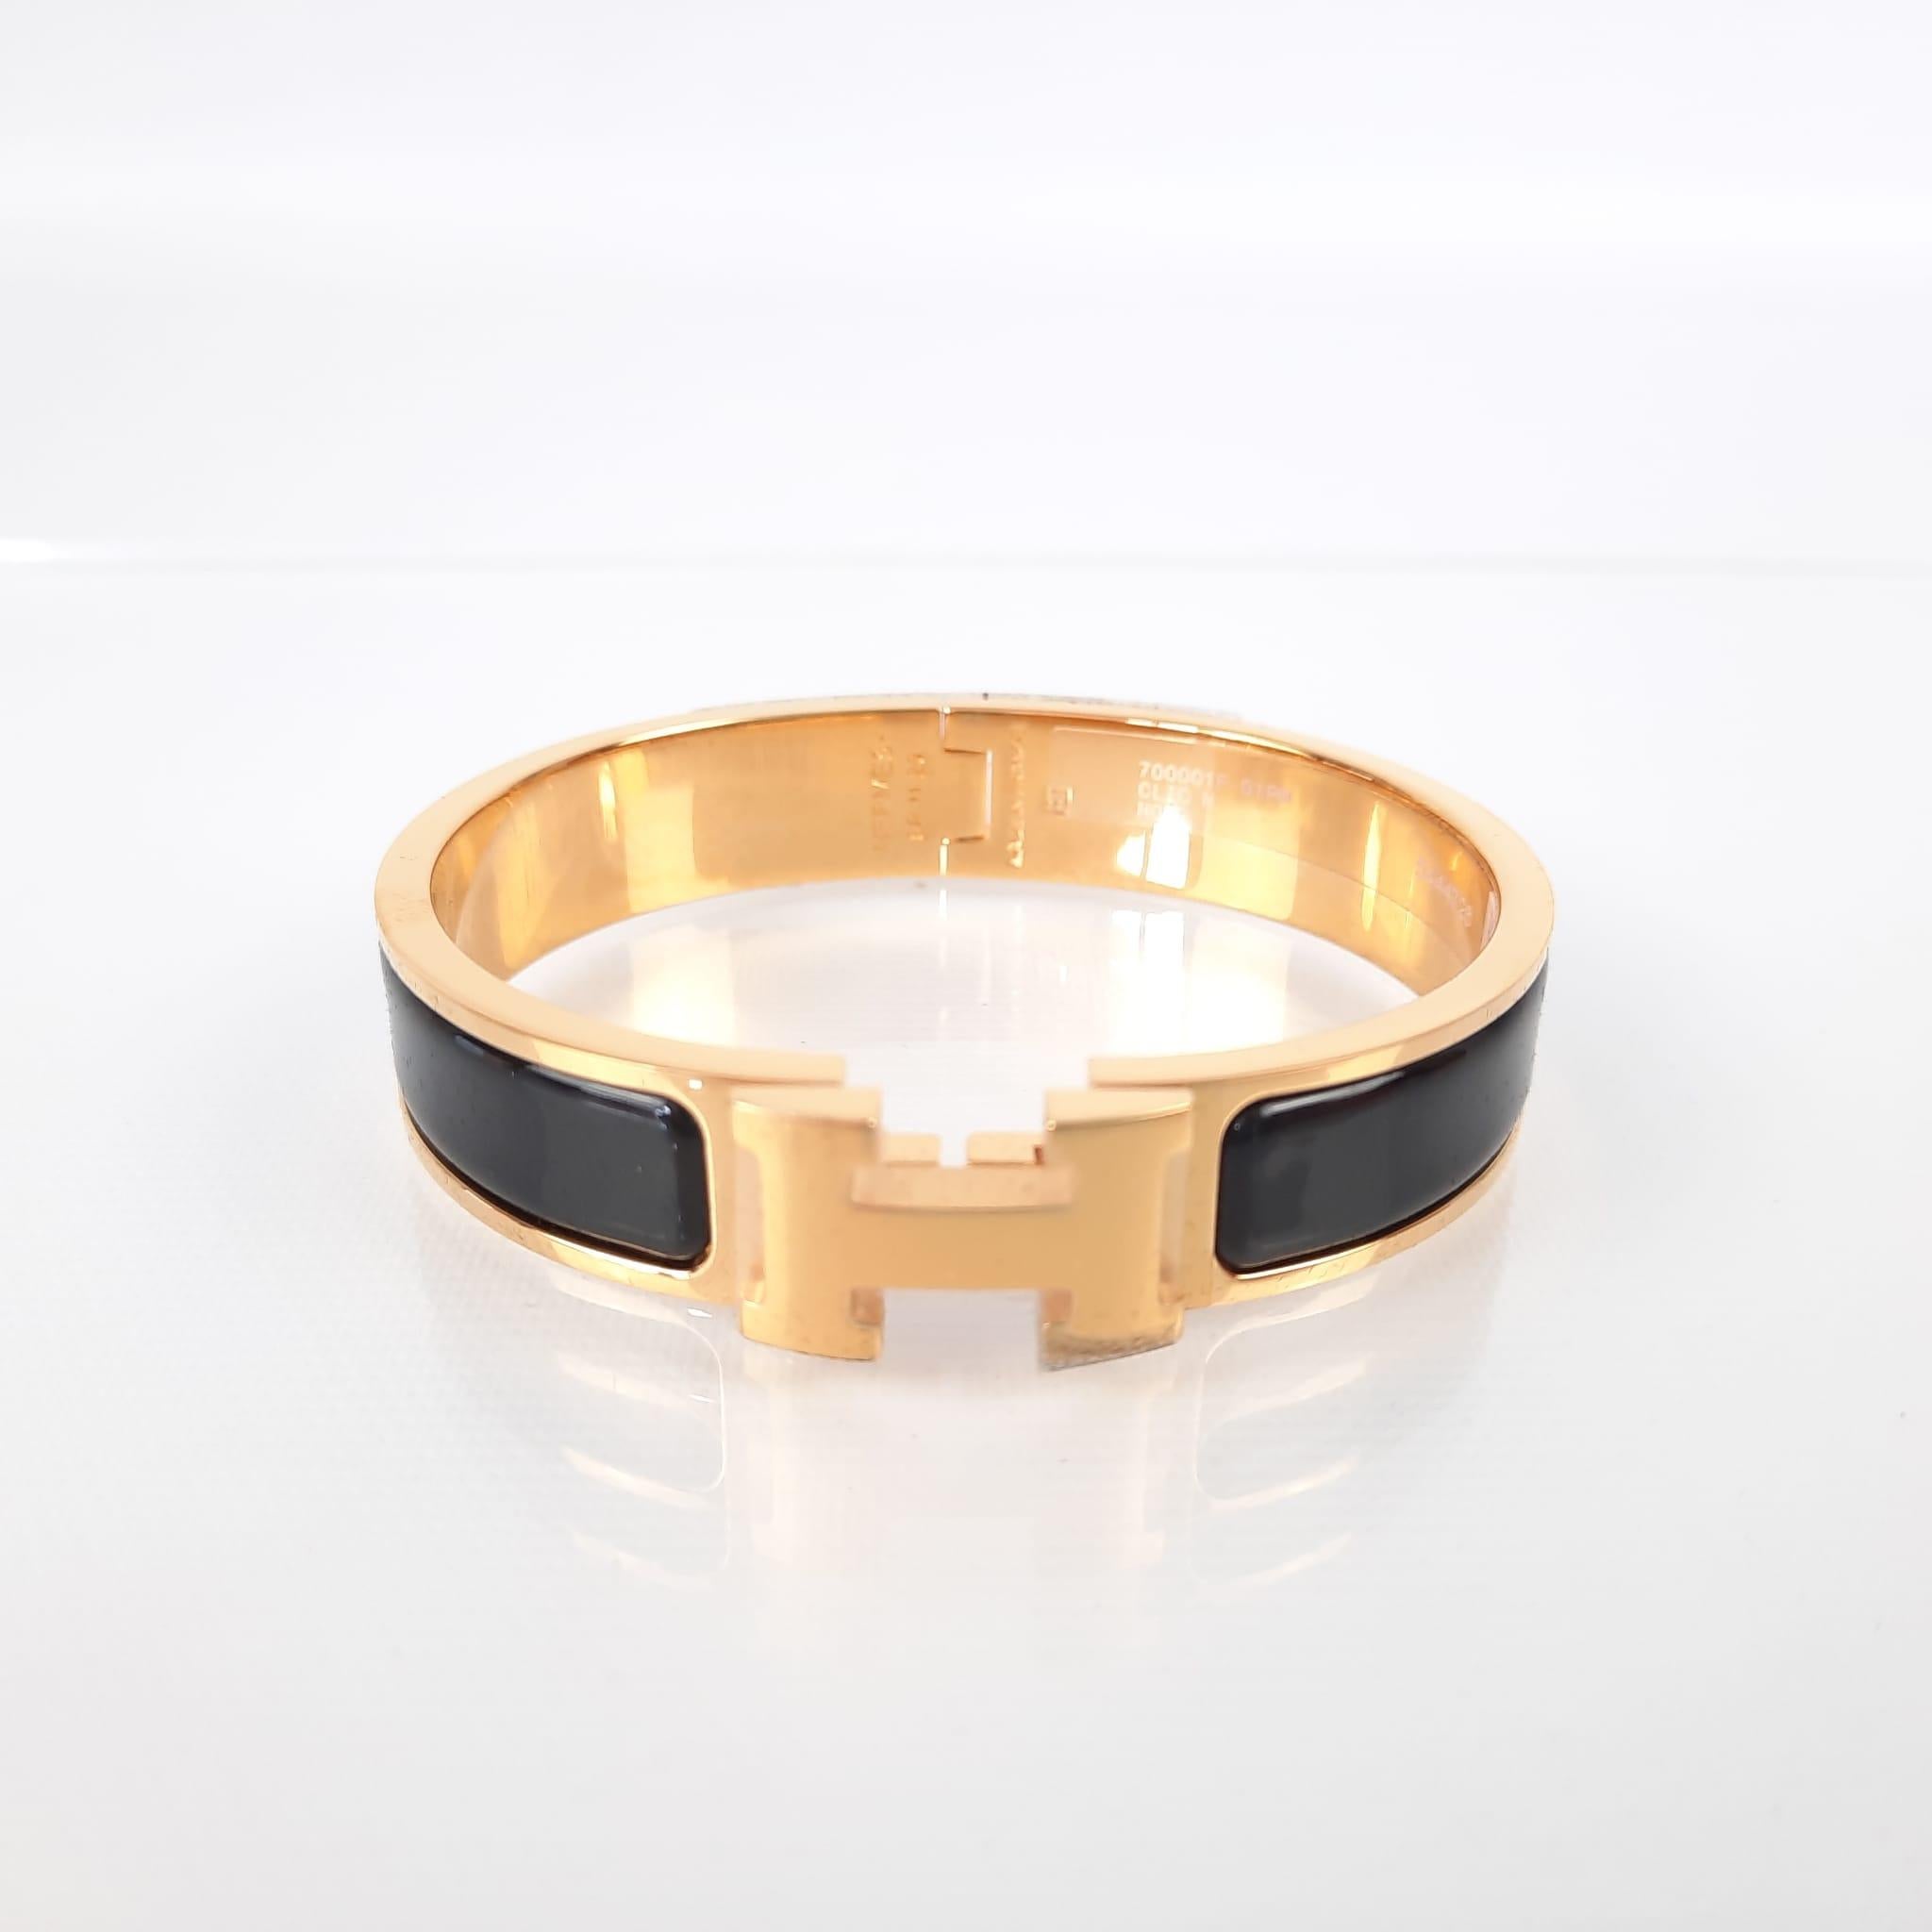 Size PM
Narrow bracelet in enamel with gold plated hardware.
Wrist size: 16.8 cm  Width: 12 mm